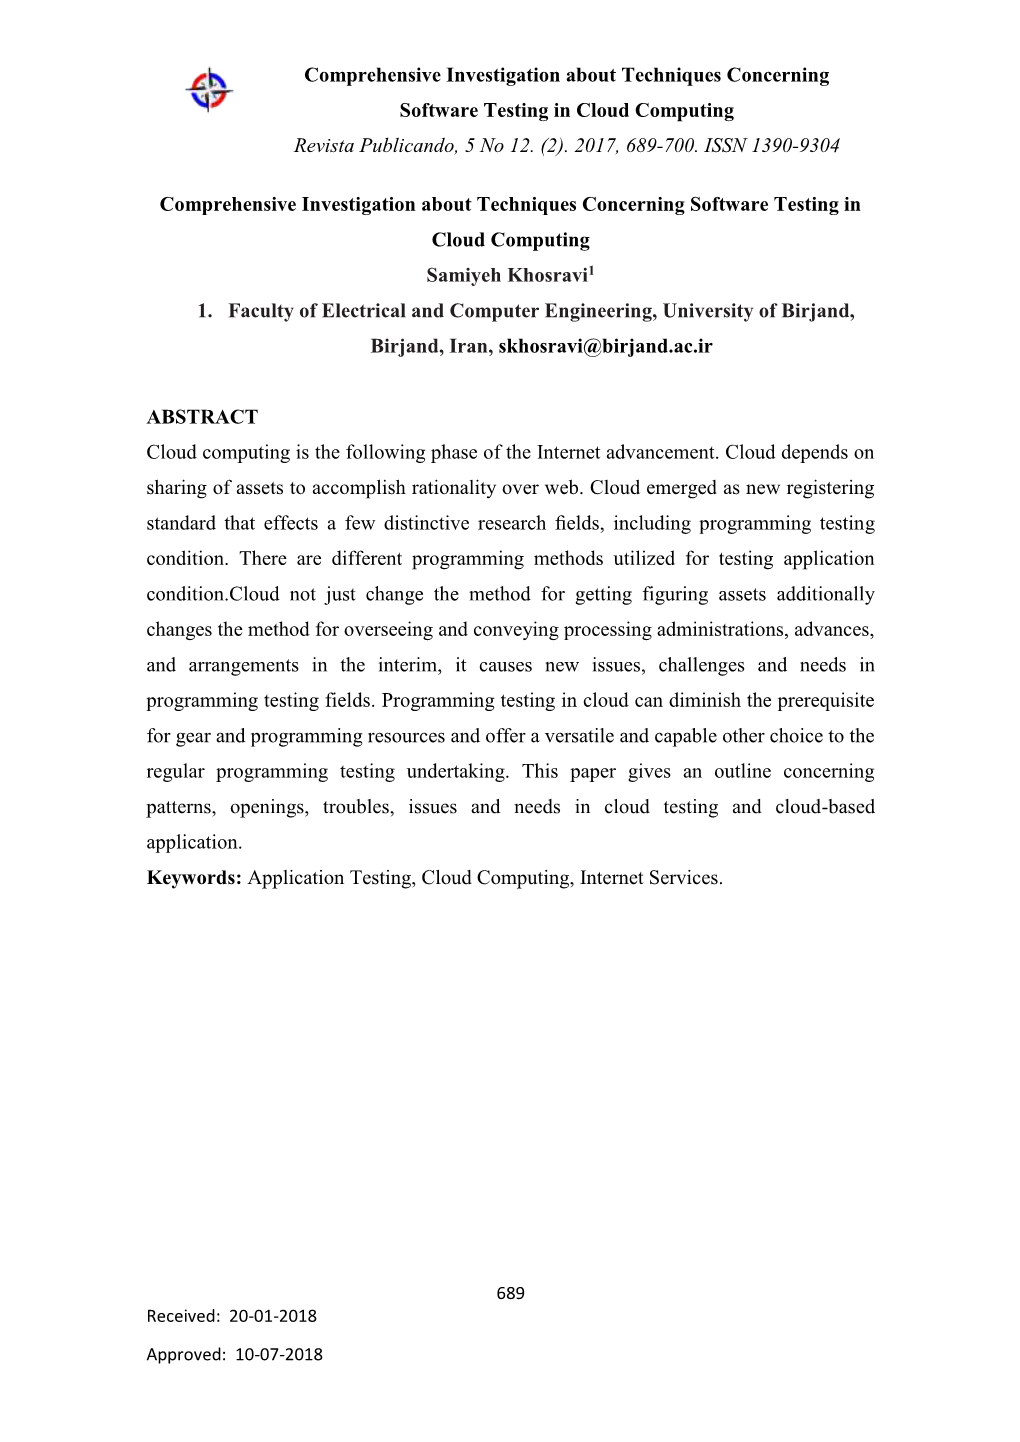 Comprehensive Investigation About Techniques Concerning Software Testing in Cloud Computing Revista Publicando, 5 No 12. (2). 2017, 689-700